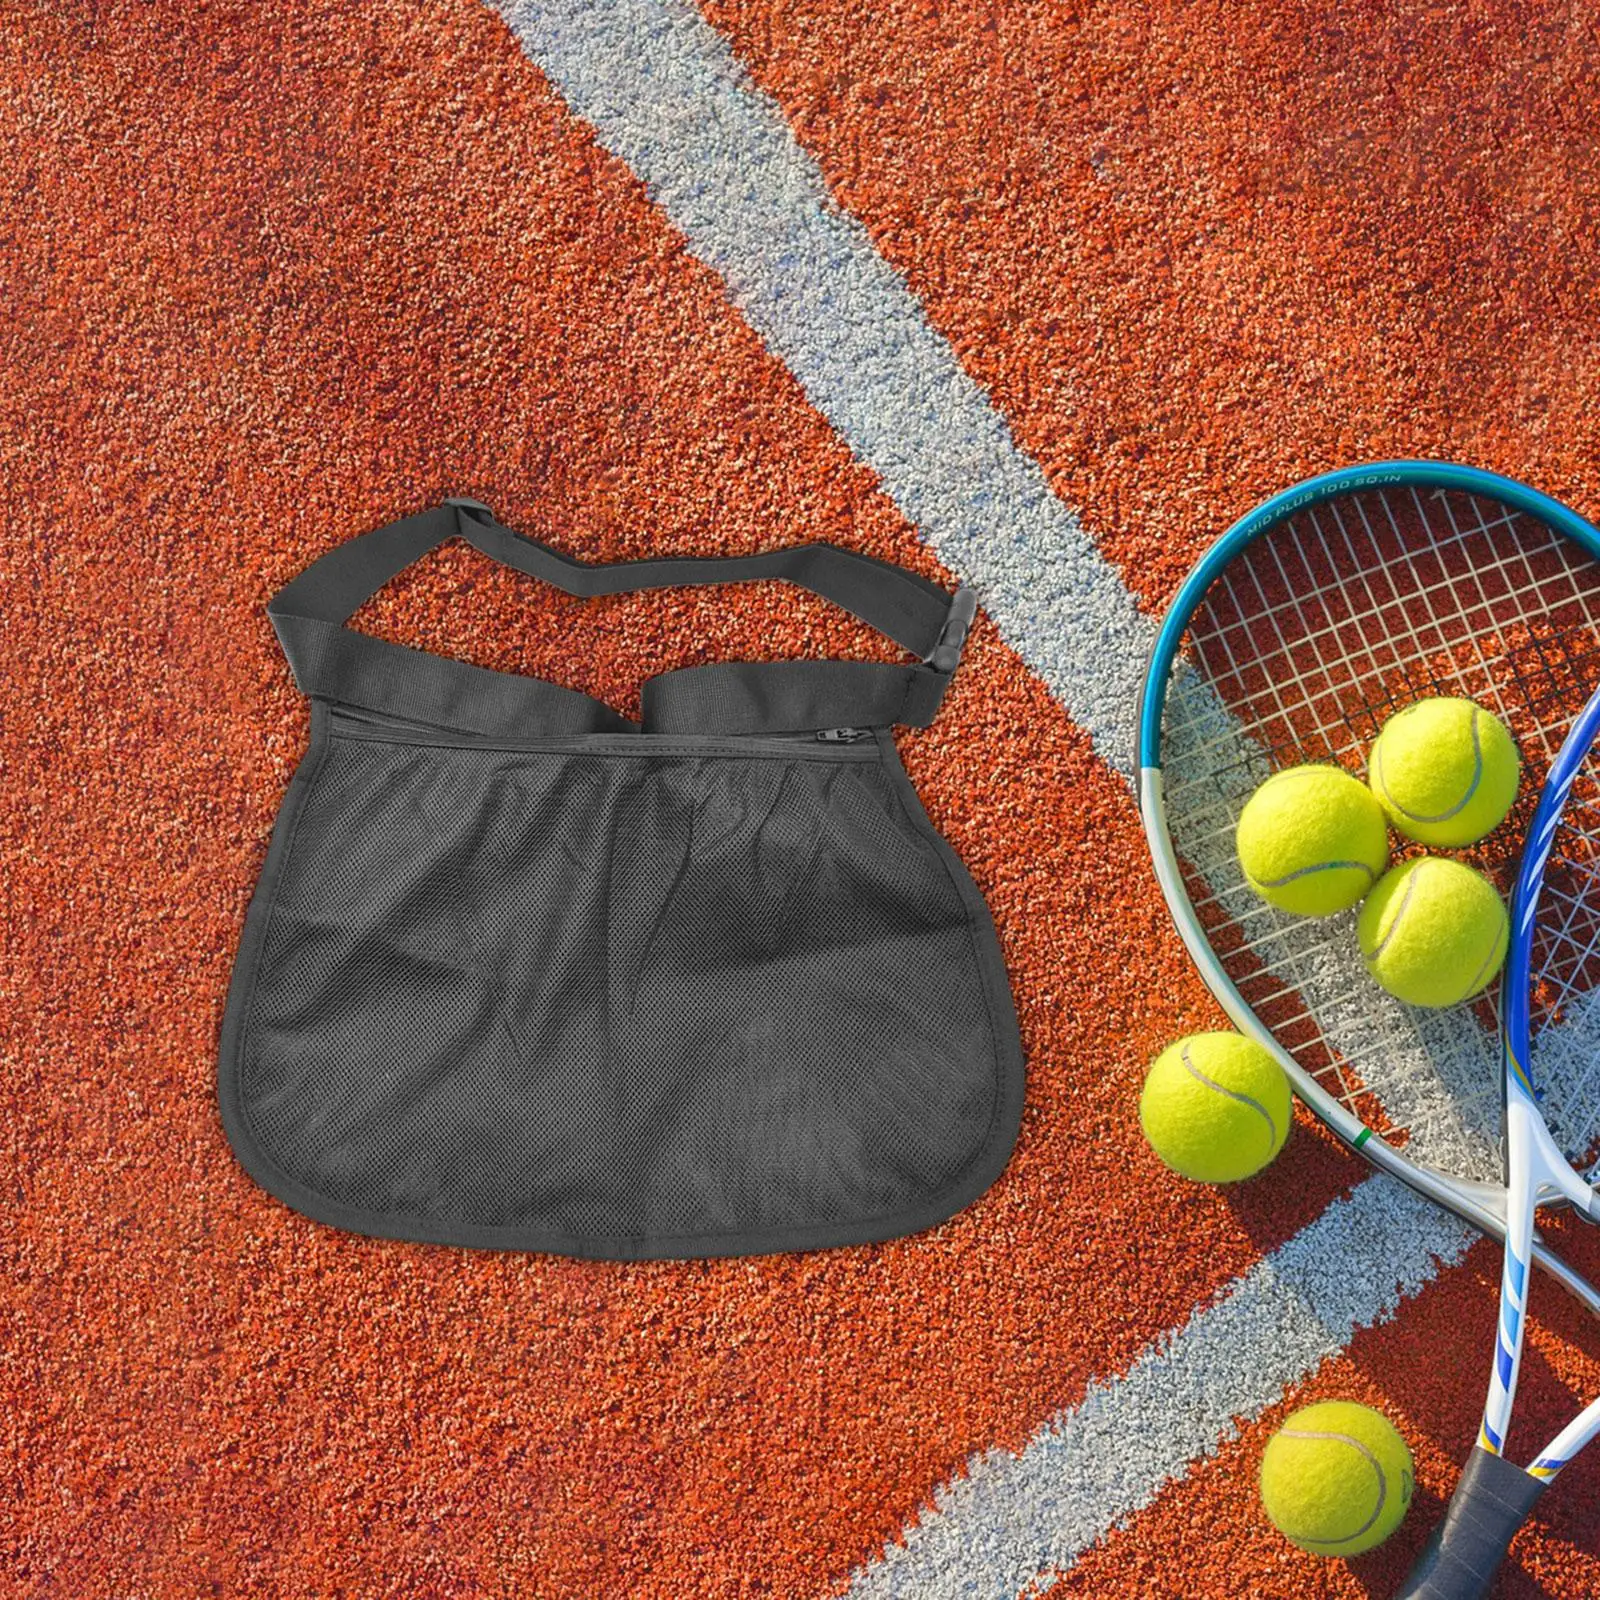 Black Tennis Ball Holder Waist Hip Bag Outdoor Ball Storage Bag for Fitness Workout Exercise Storing Balls and Phones Women Men